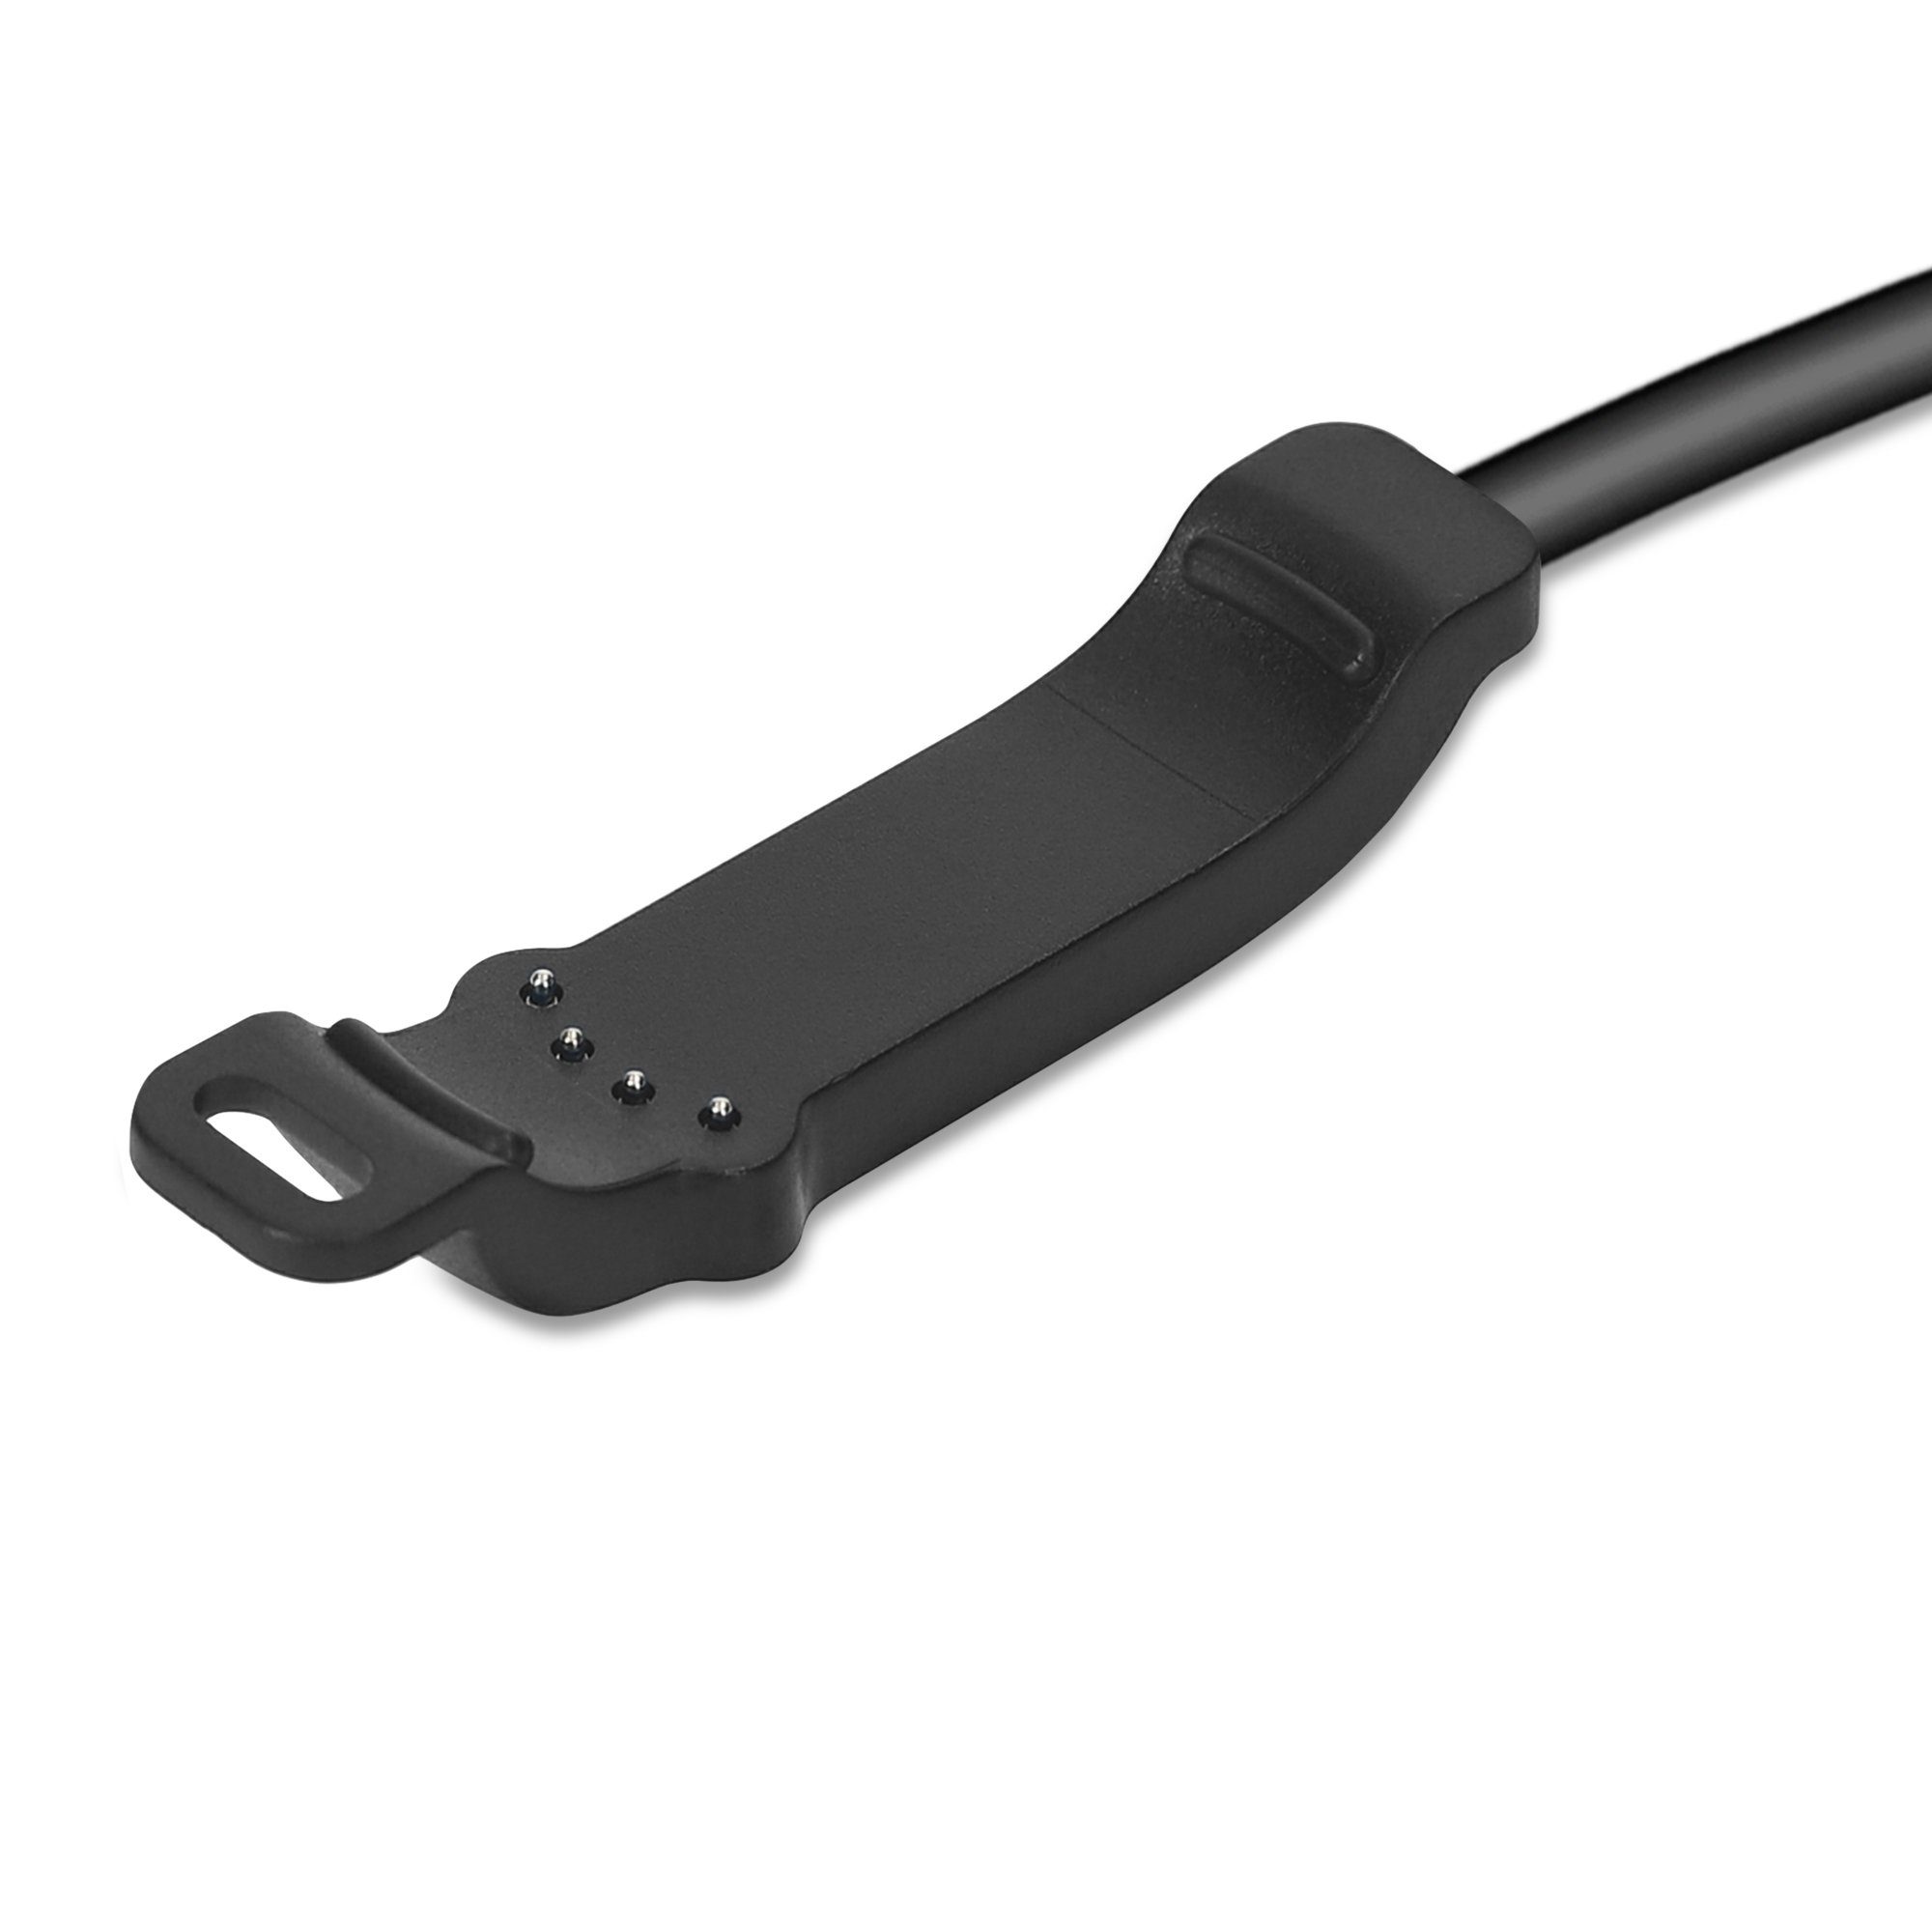 Fitnesstracker Ersatzkabel Unite - Aufladekabel - für Smart Watch Elektro-Kabel, kwmobile Ladekabel Kabel Charger USB Polar